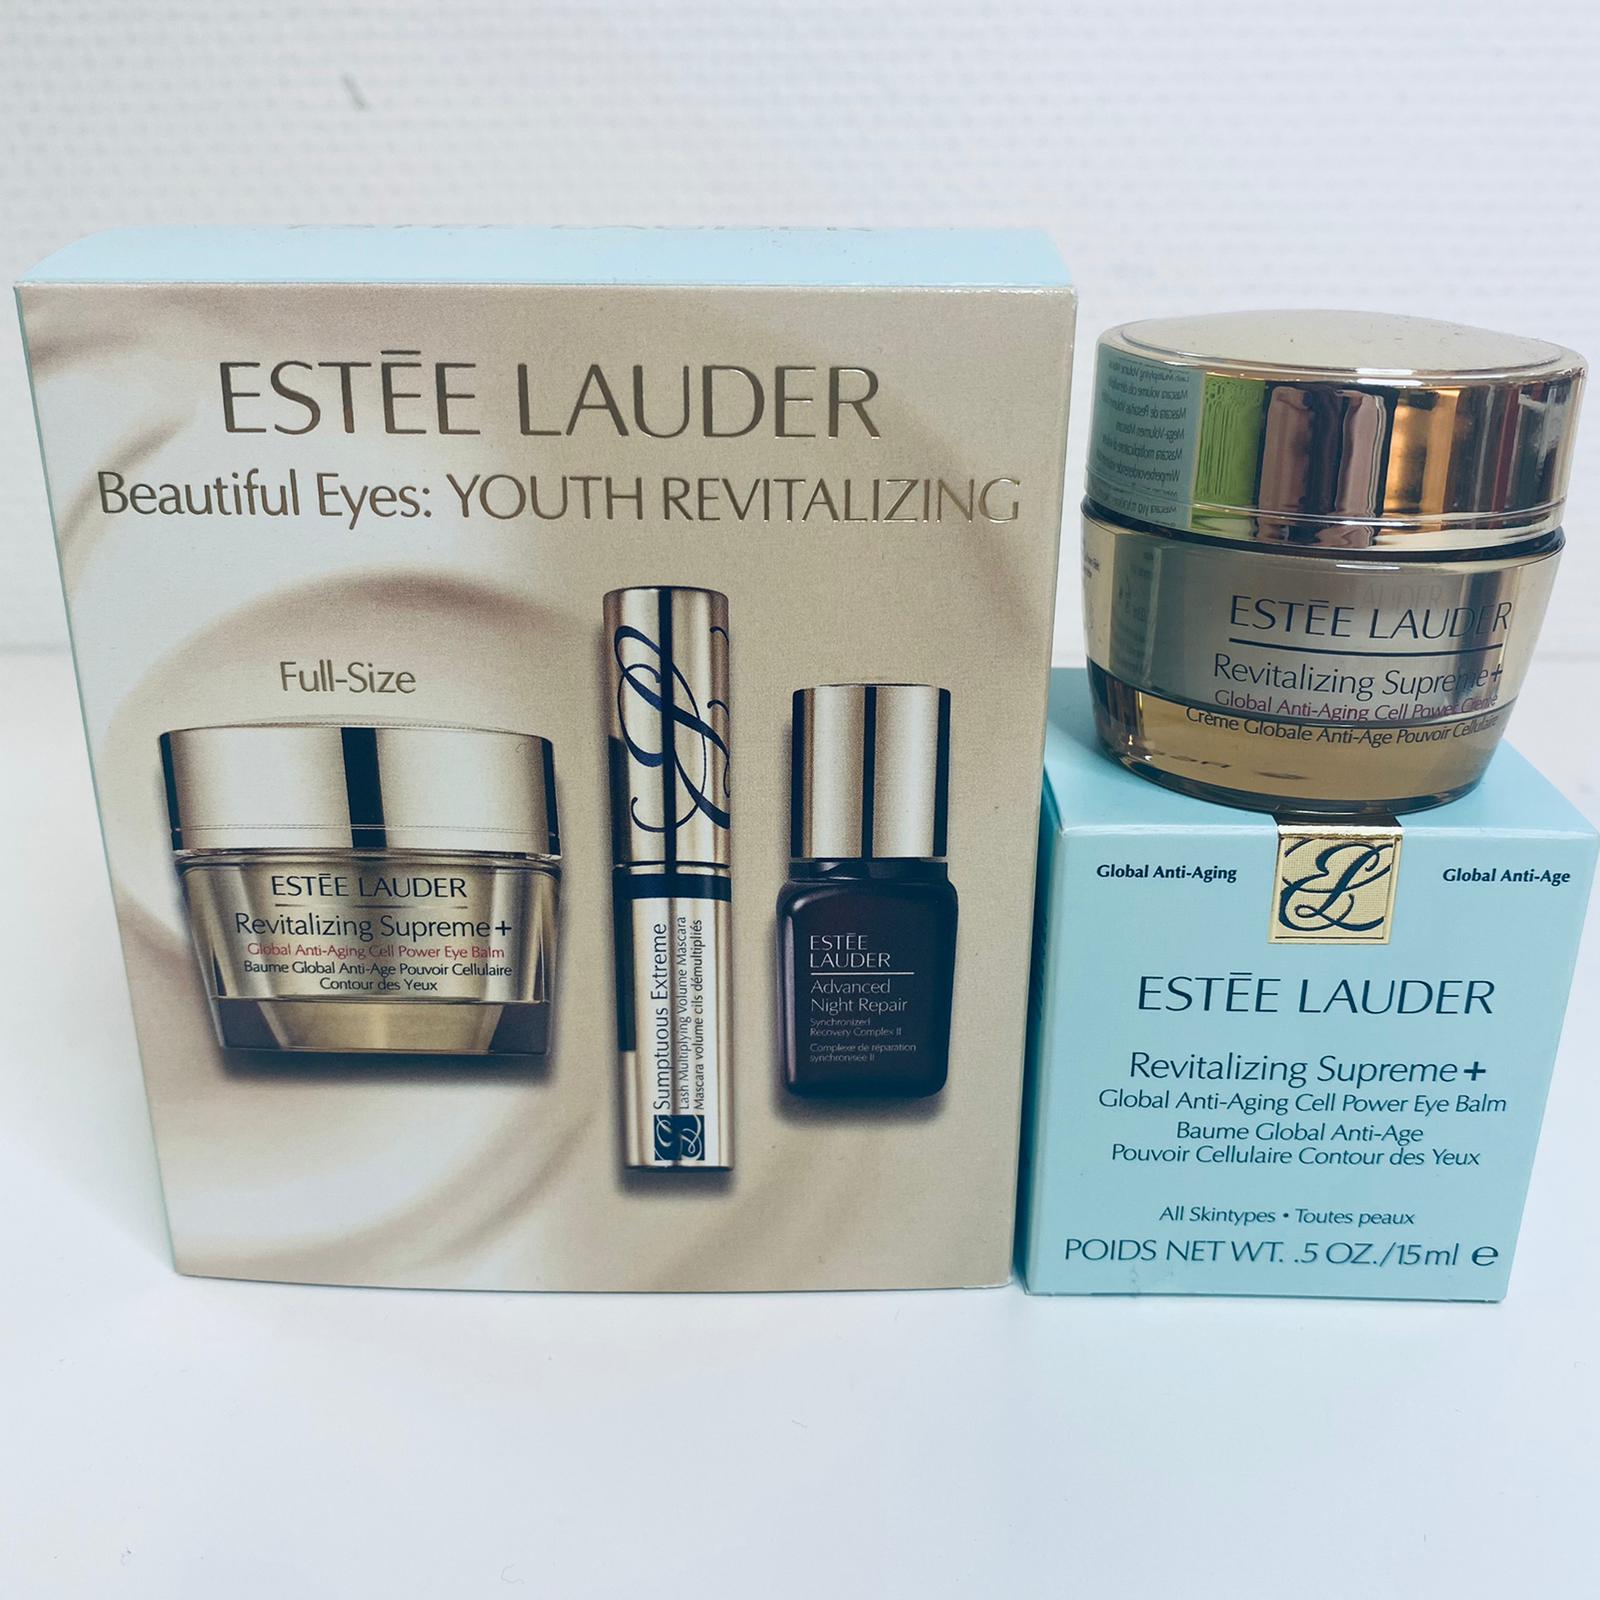 Estee Lauder Revitalizing Supreme + eye balm all skintypes 15 ml